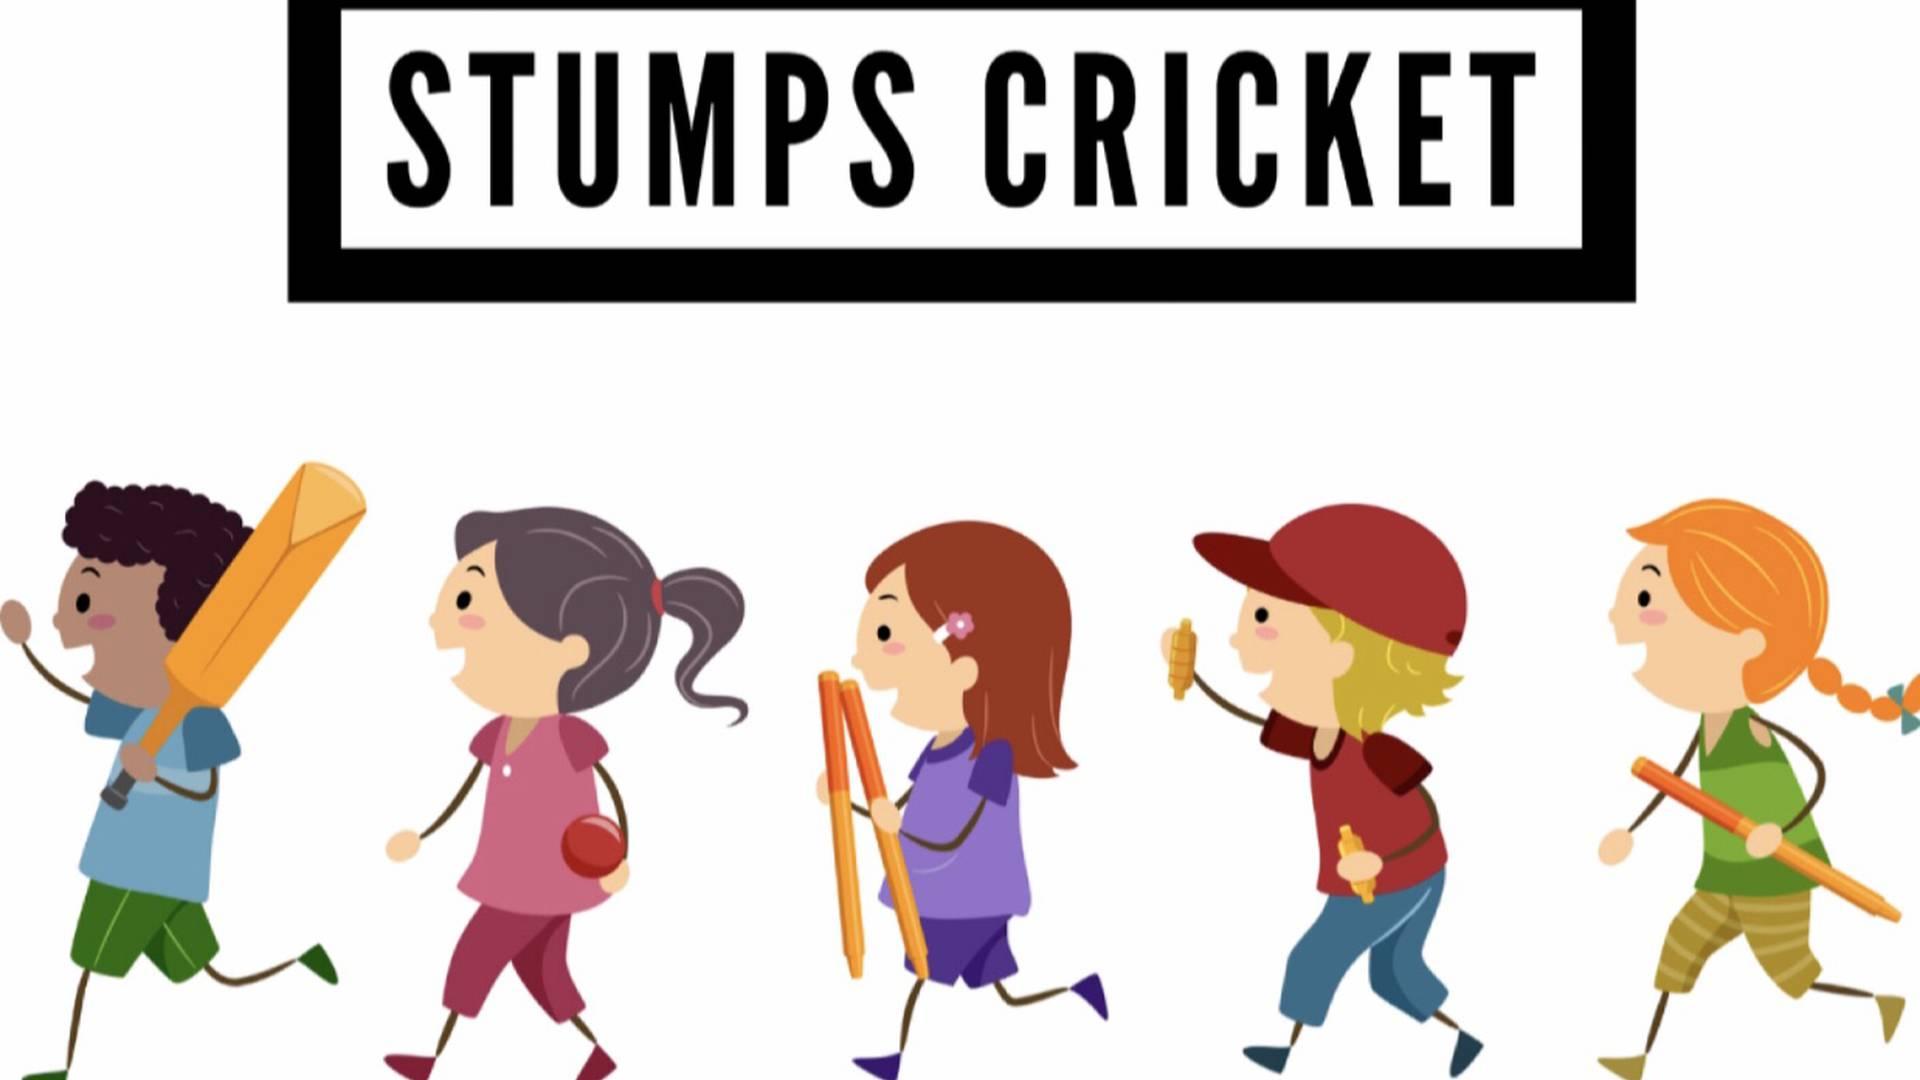 Stumps Cricket photo